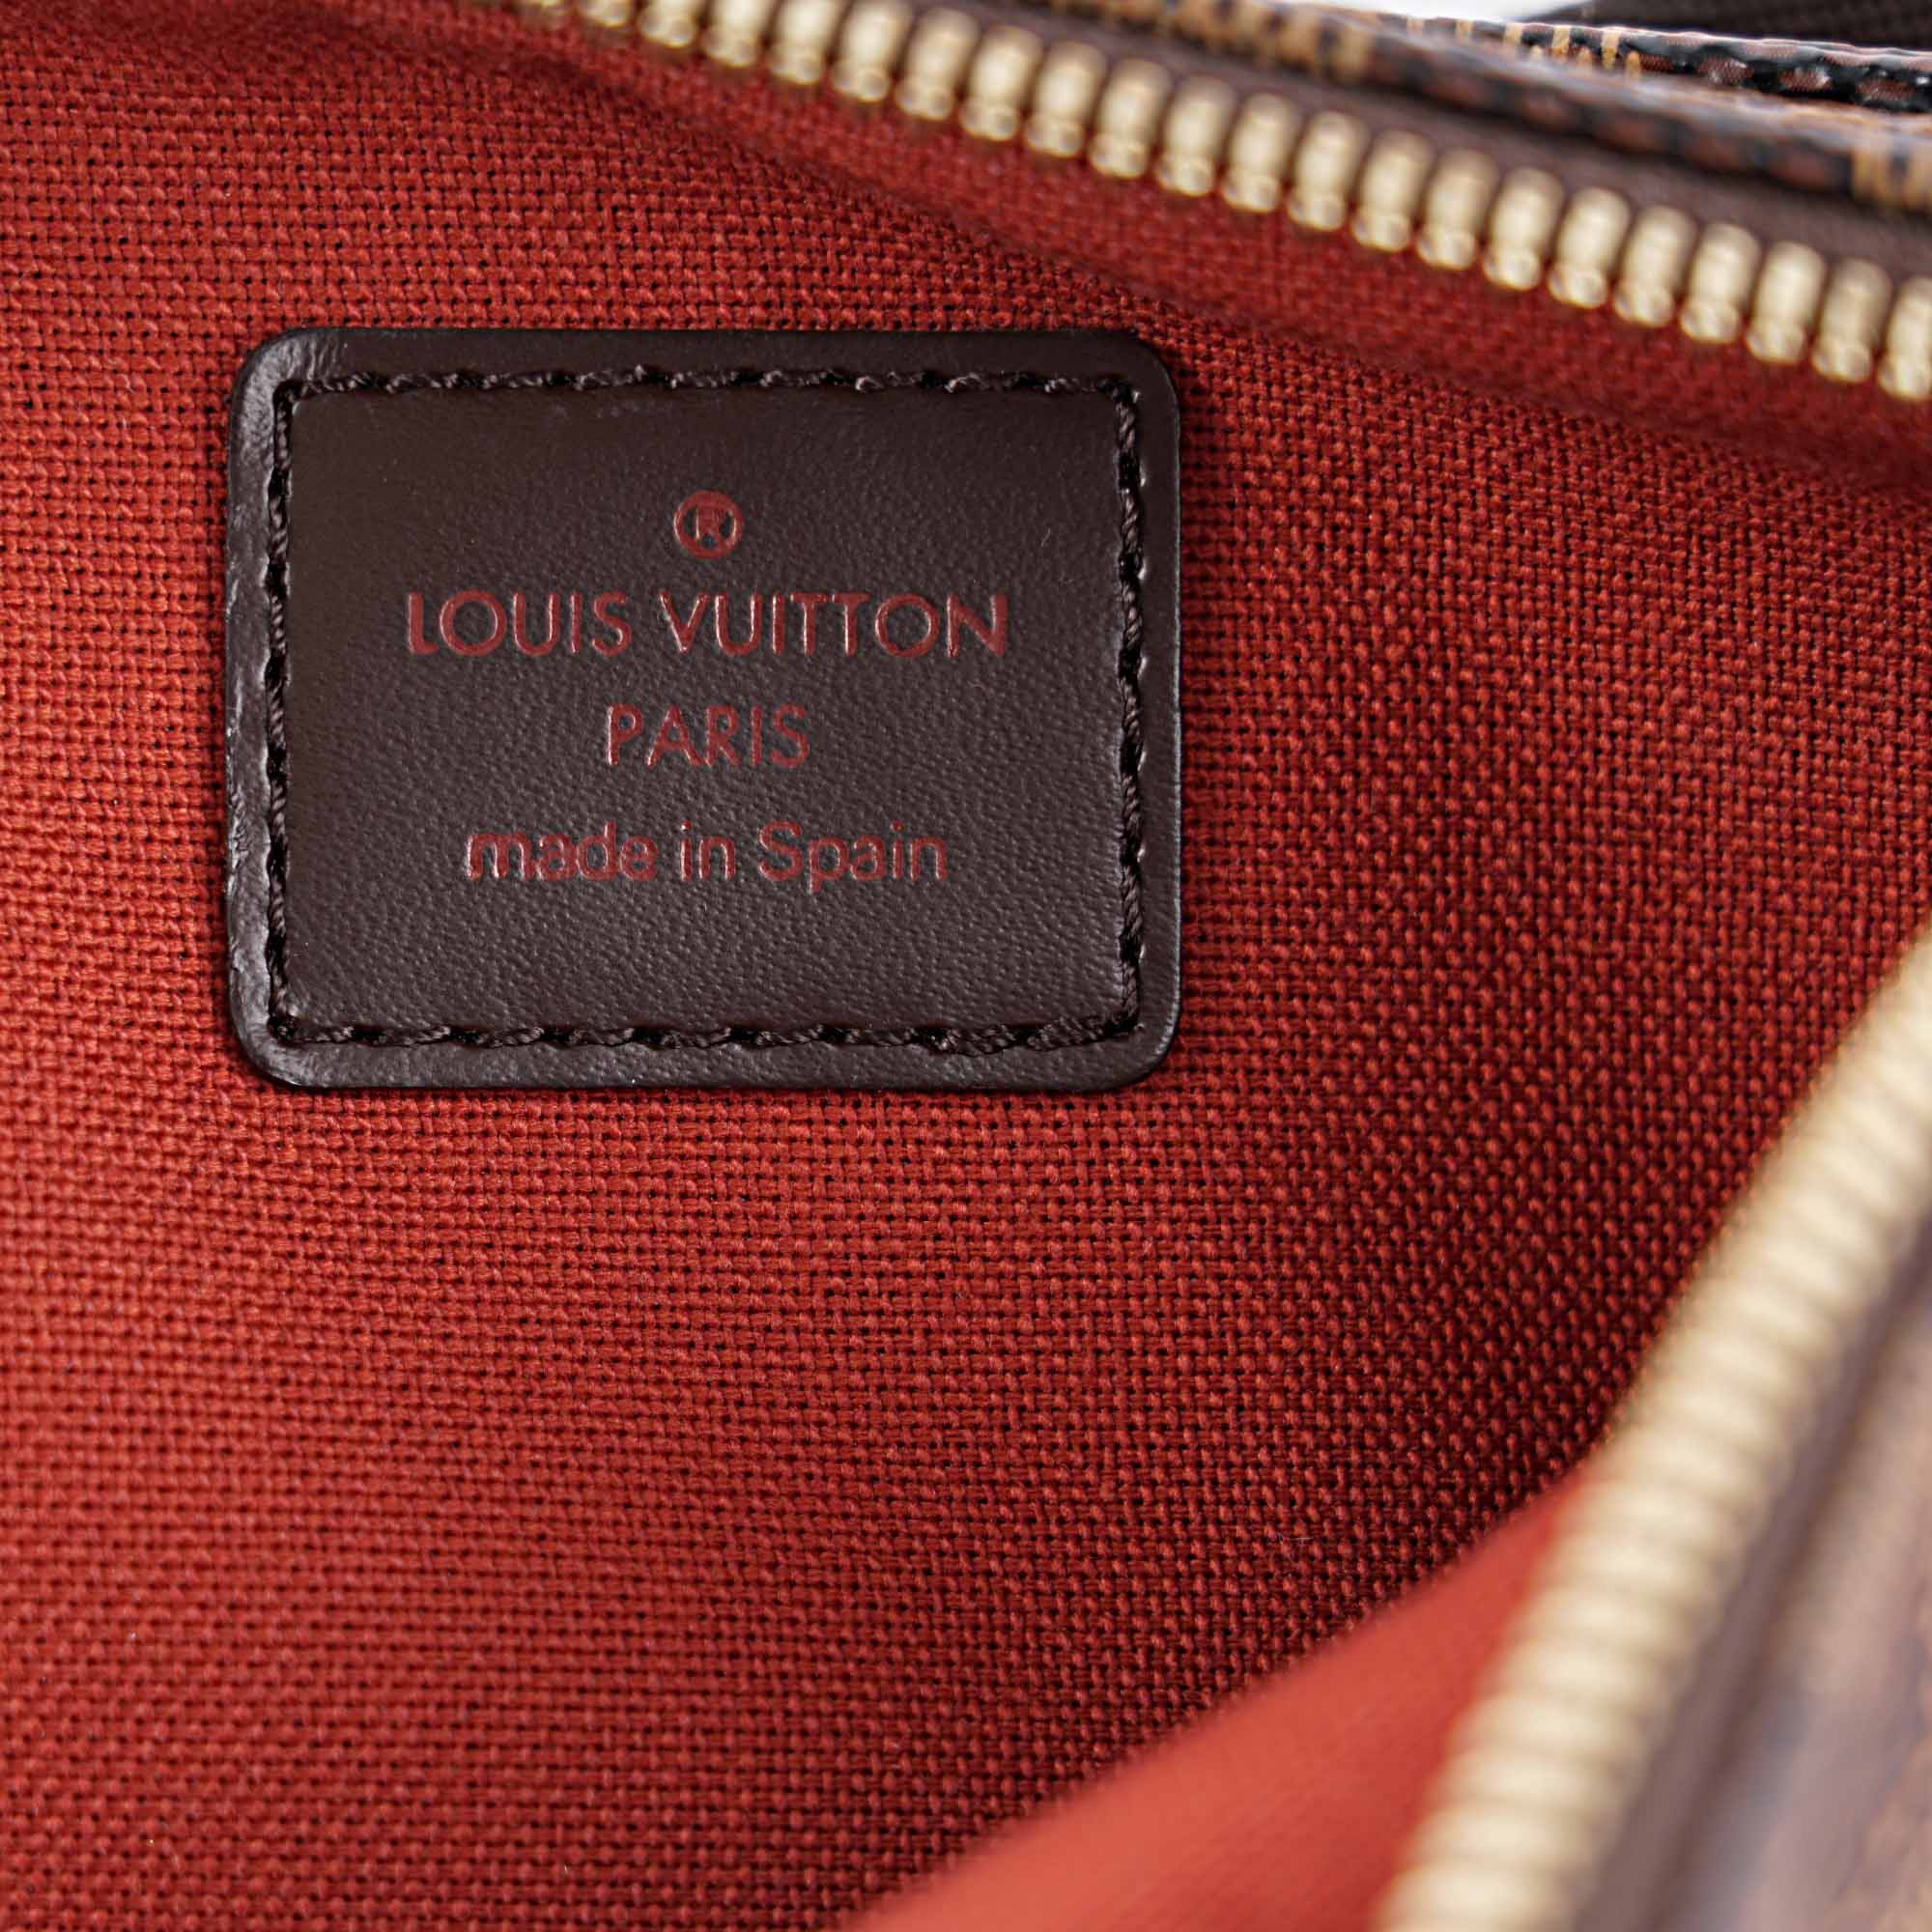 Geronimos Waist Bag - LOUIS VUITTON - Affordable Luxury image